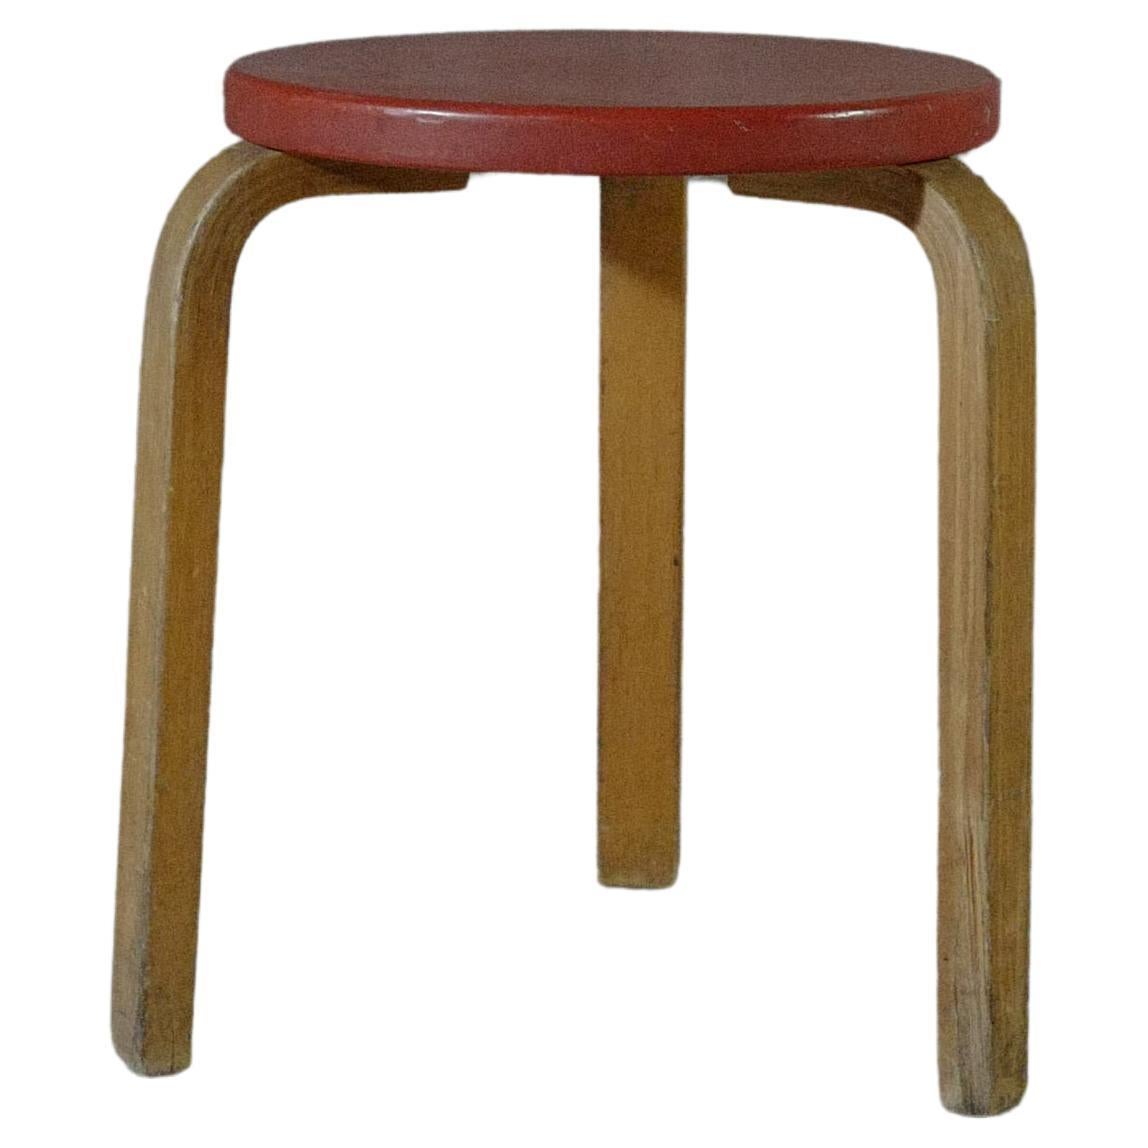 alvar aalto stool60 vinyl leather red 1950's For Sale